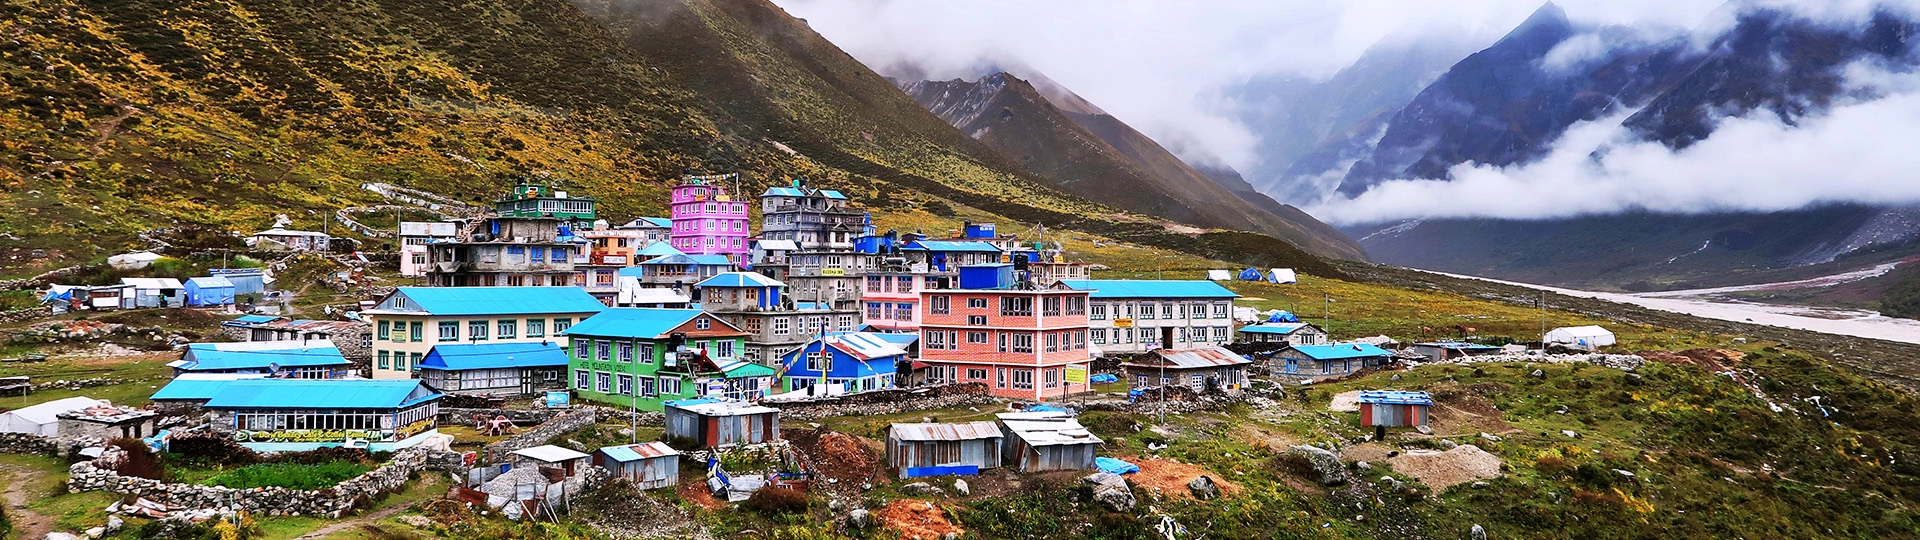 Langtang Region: A Hidden Gem in Nepal for Trekking, Climbing, and Cultural Immersion Tour